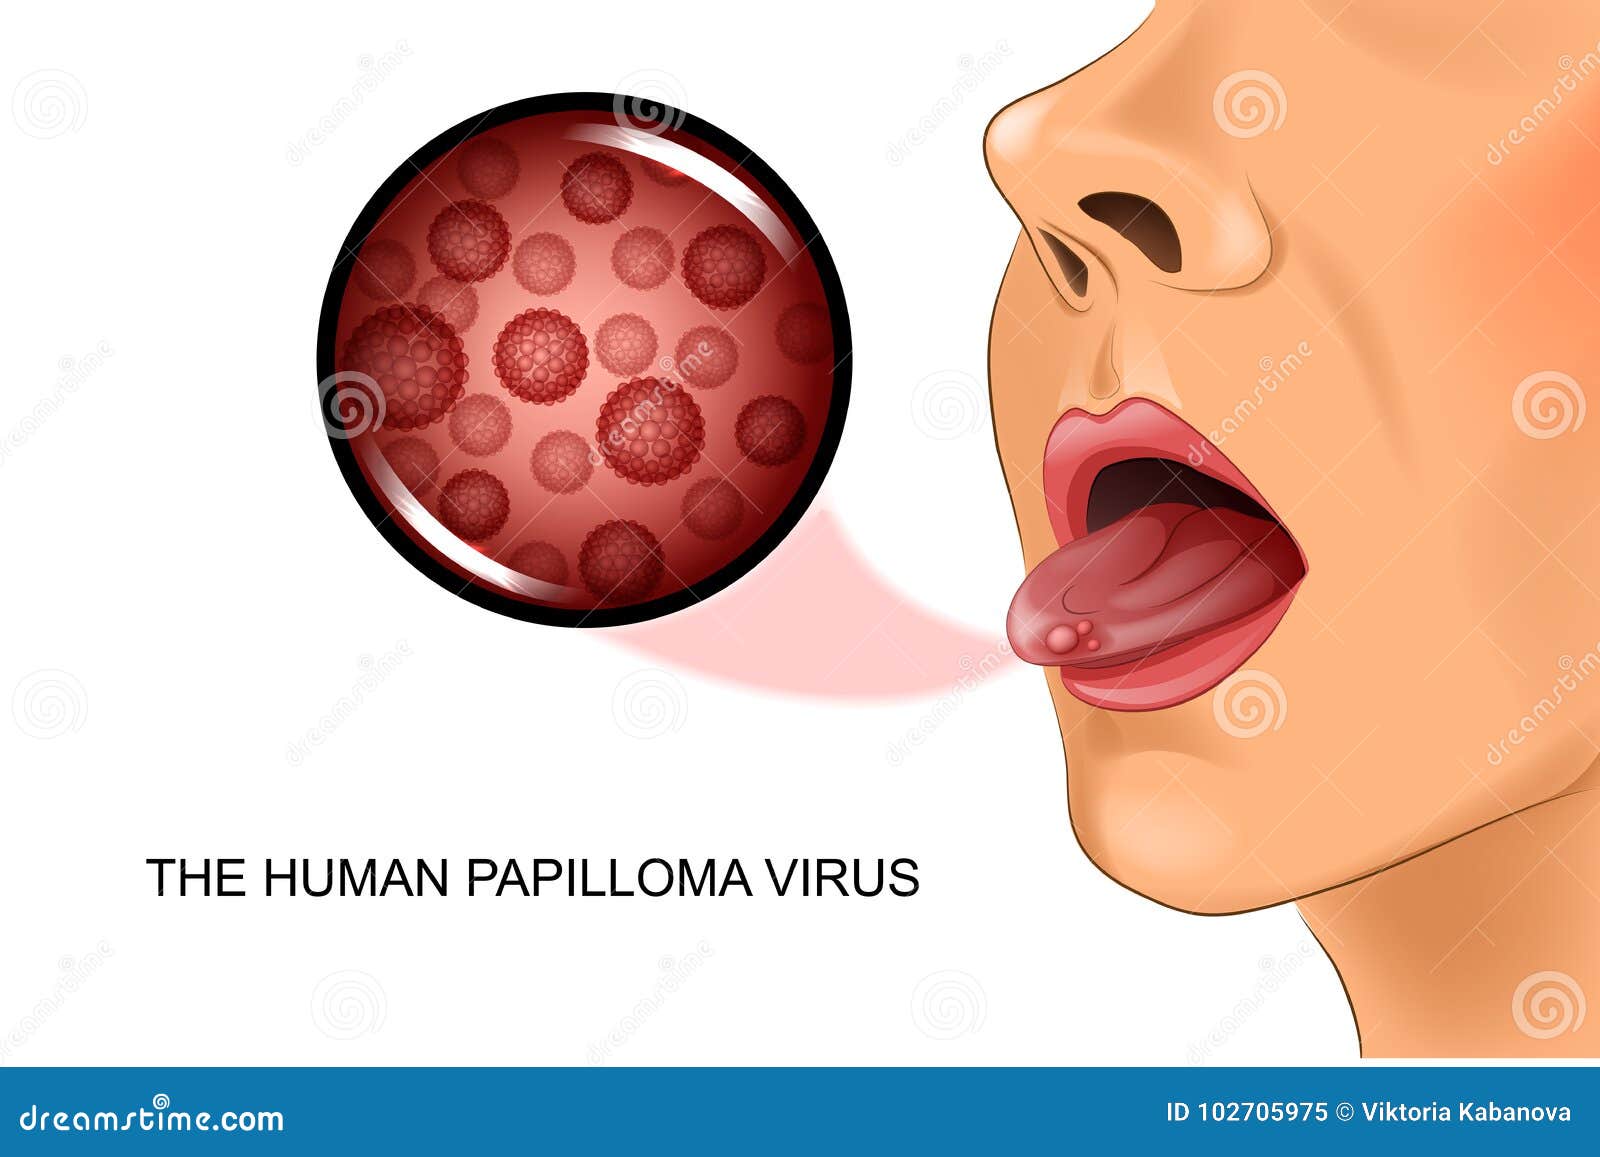 papillomavirus humain langue hpv type causes genital warts